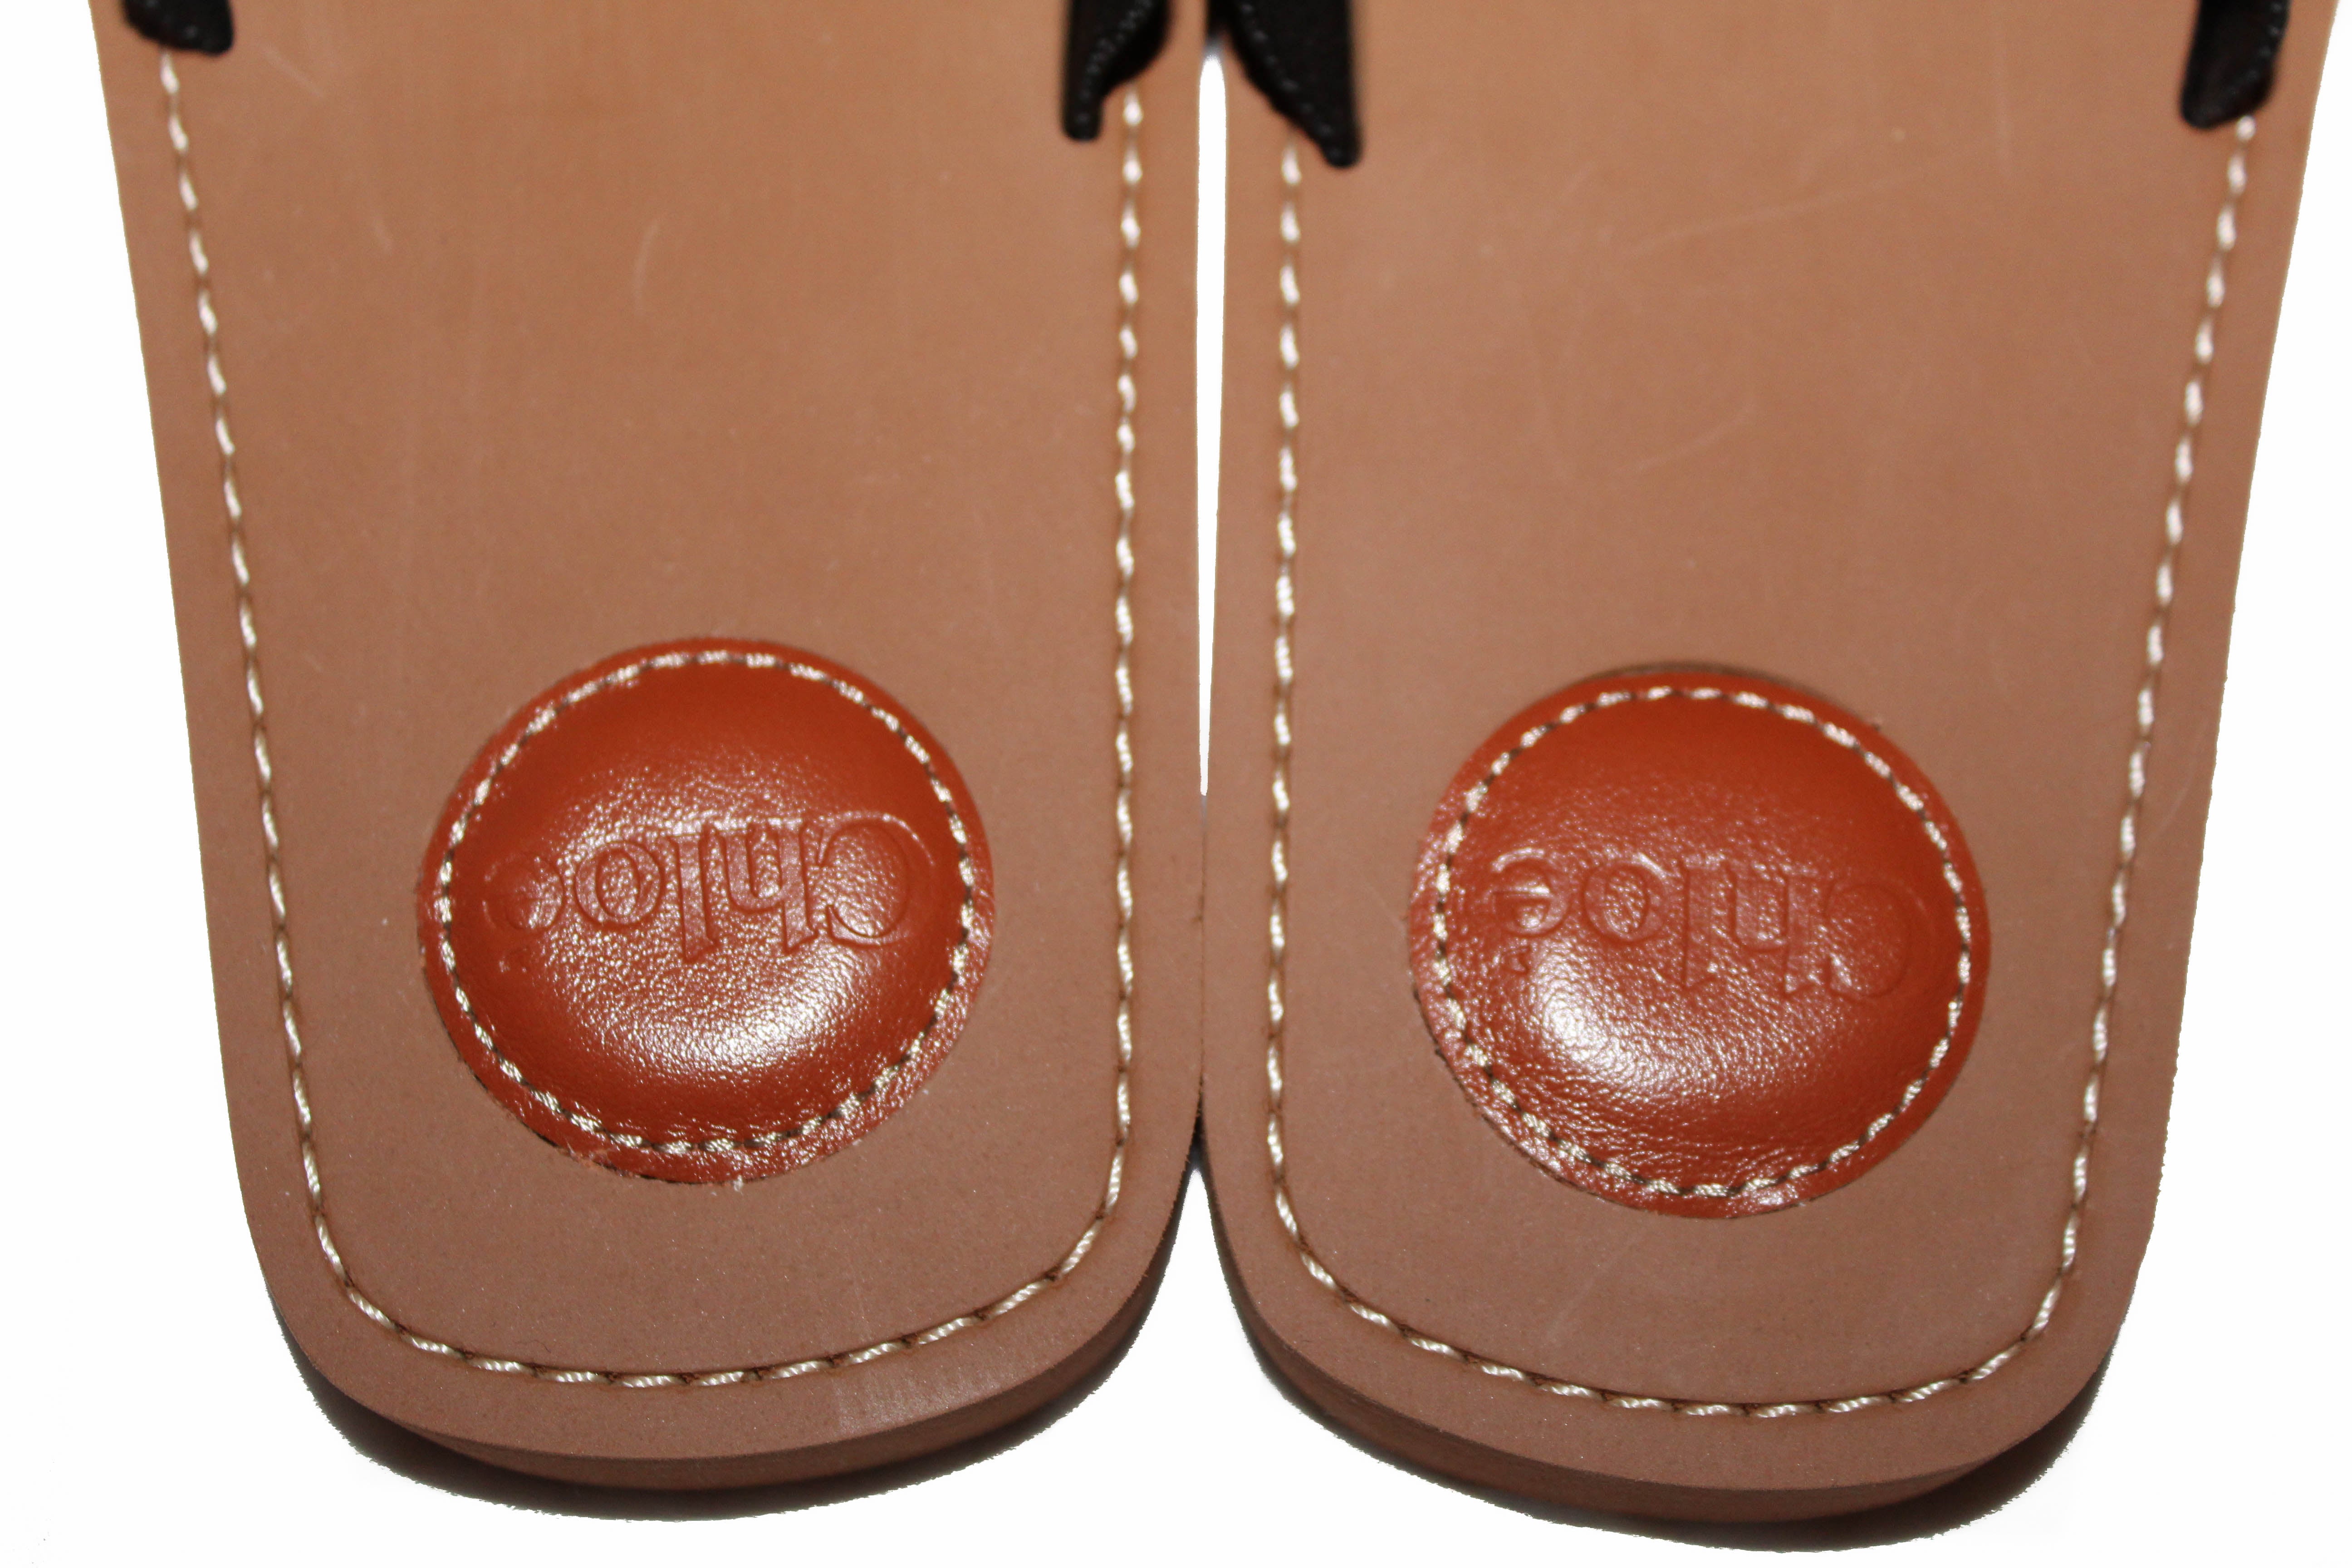 Authentic New Chloe Black Women's Woody Logo Slide Sandals Flats Size 37